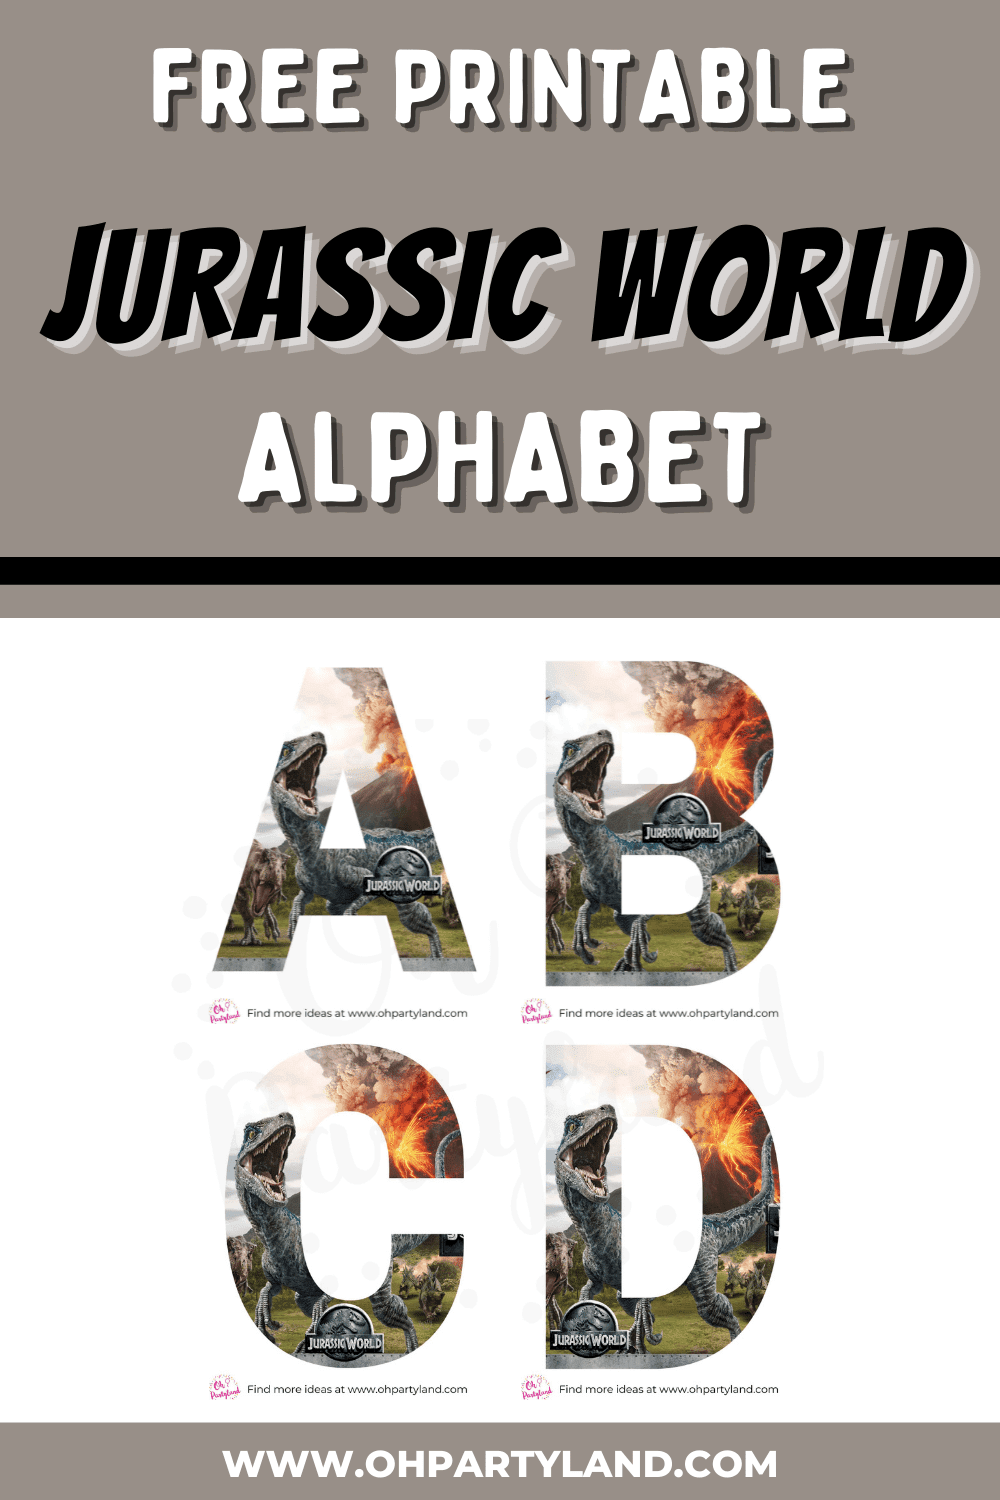 Free printable Jurassic Wold Alphabet